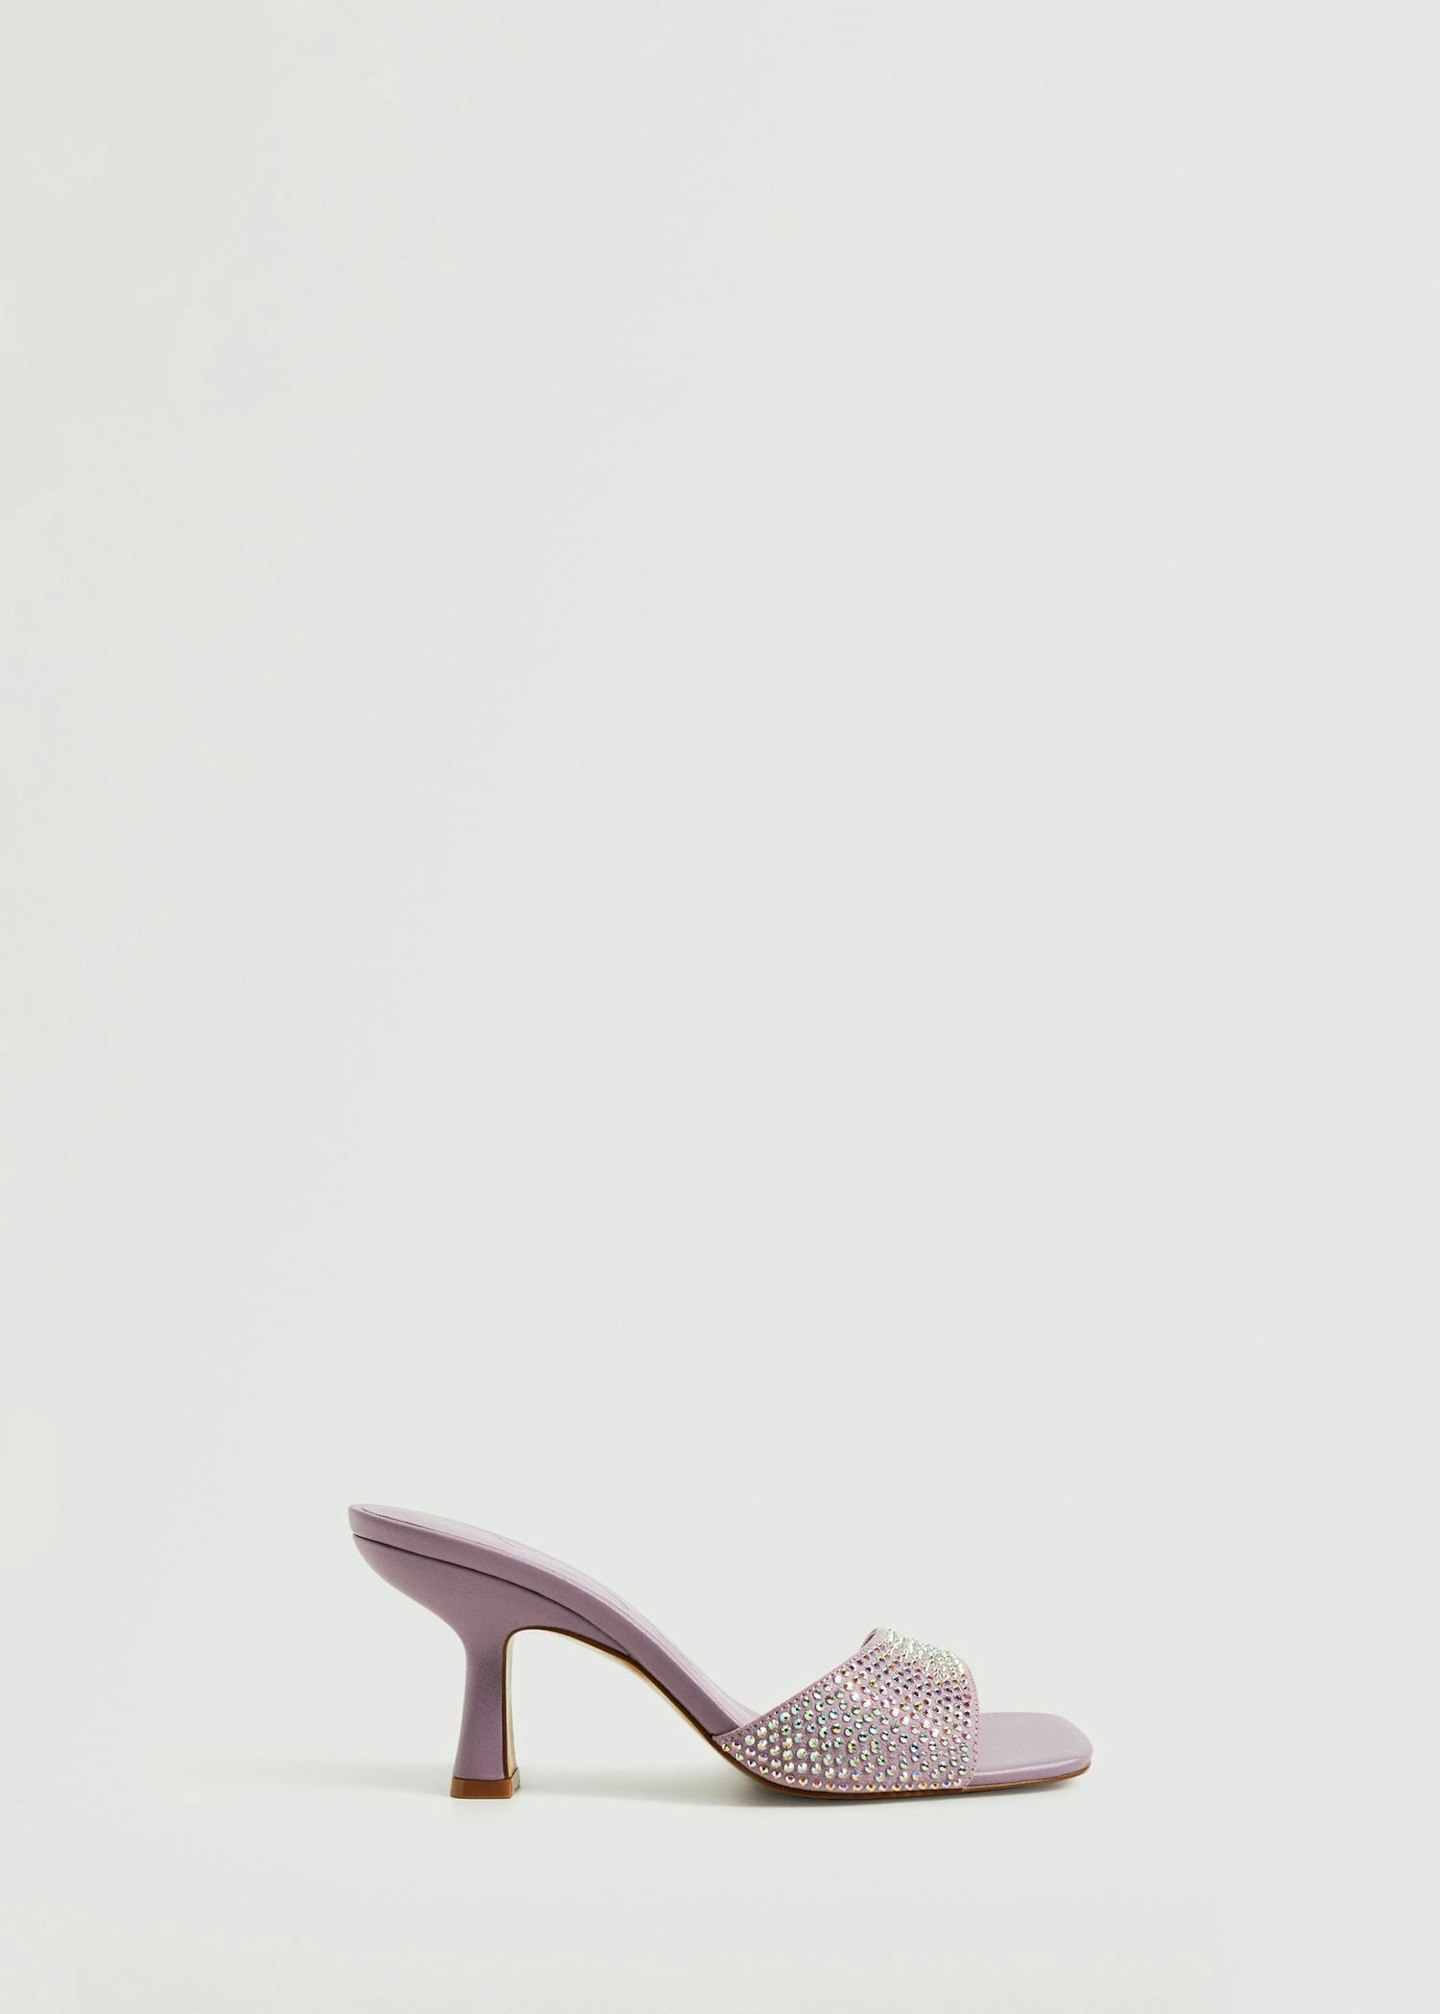 mango embellished heels party shoes